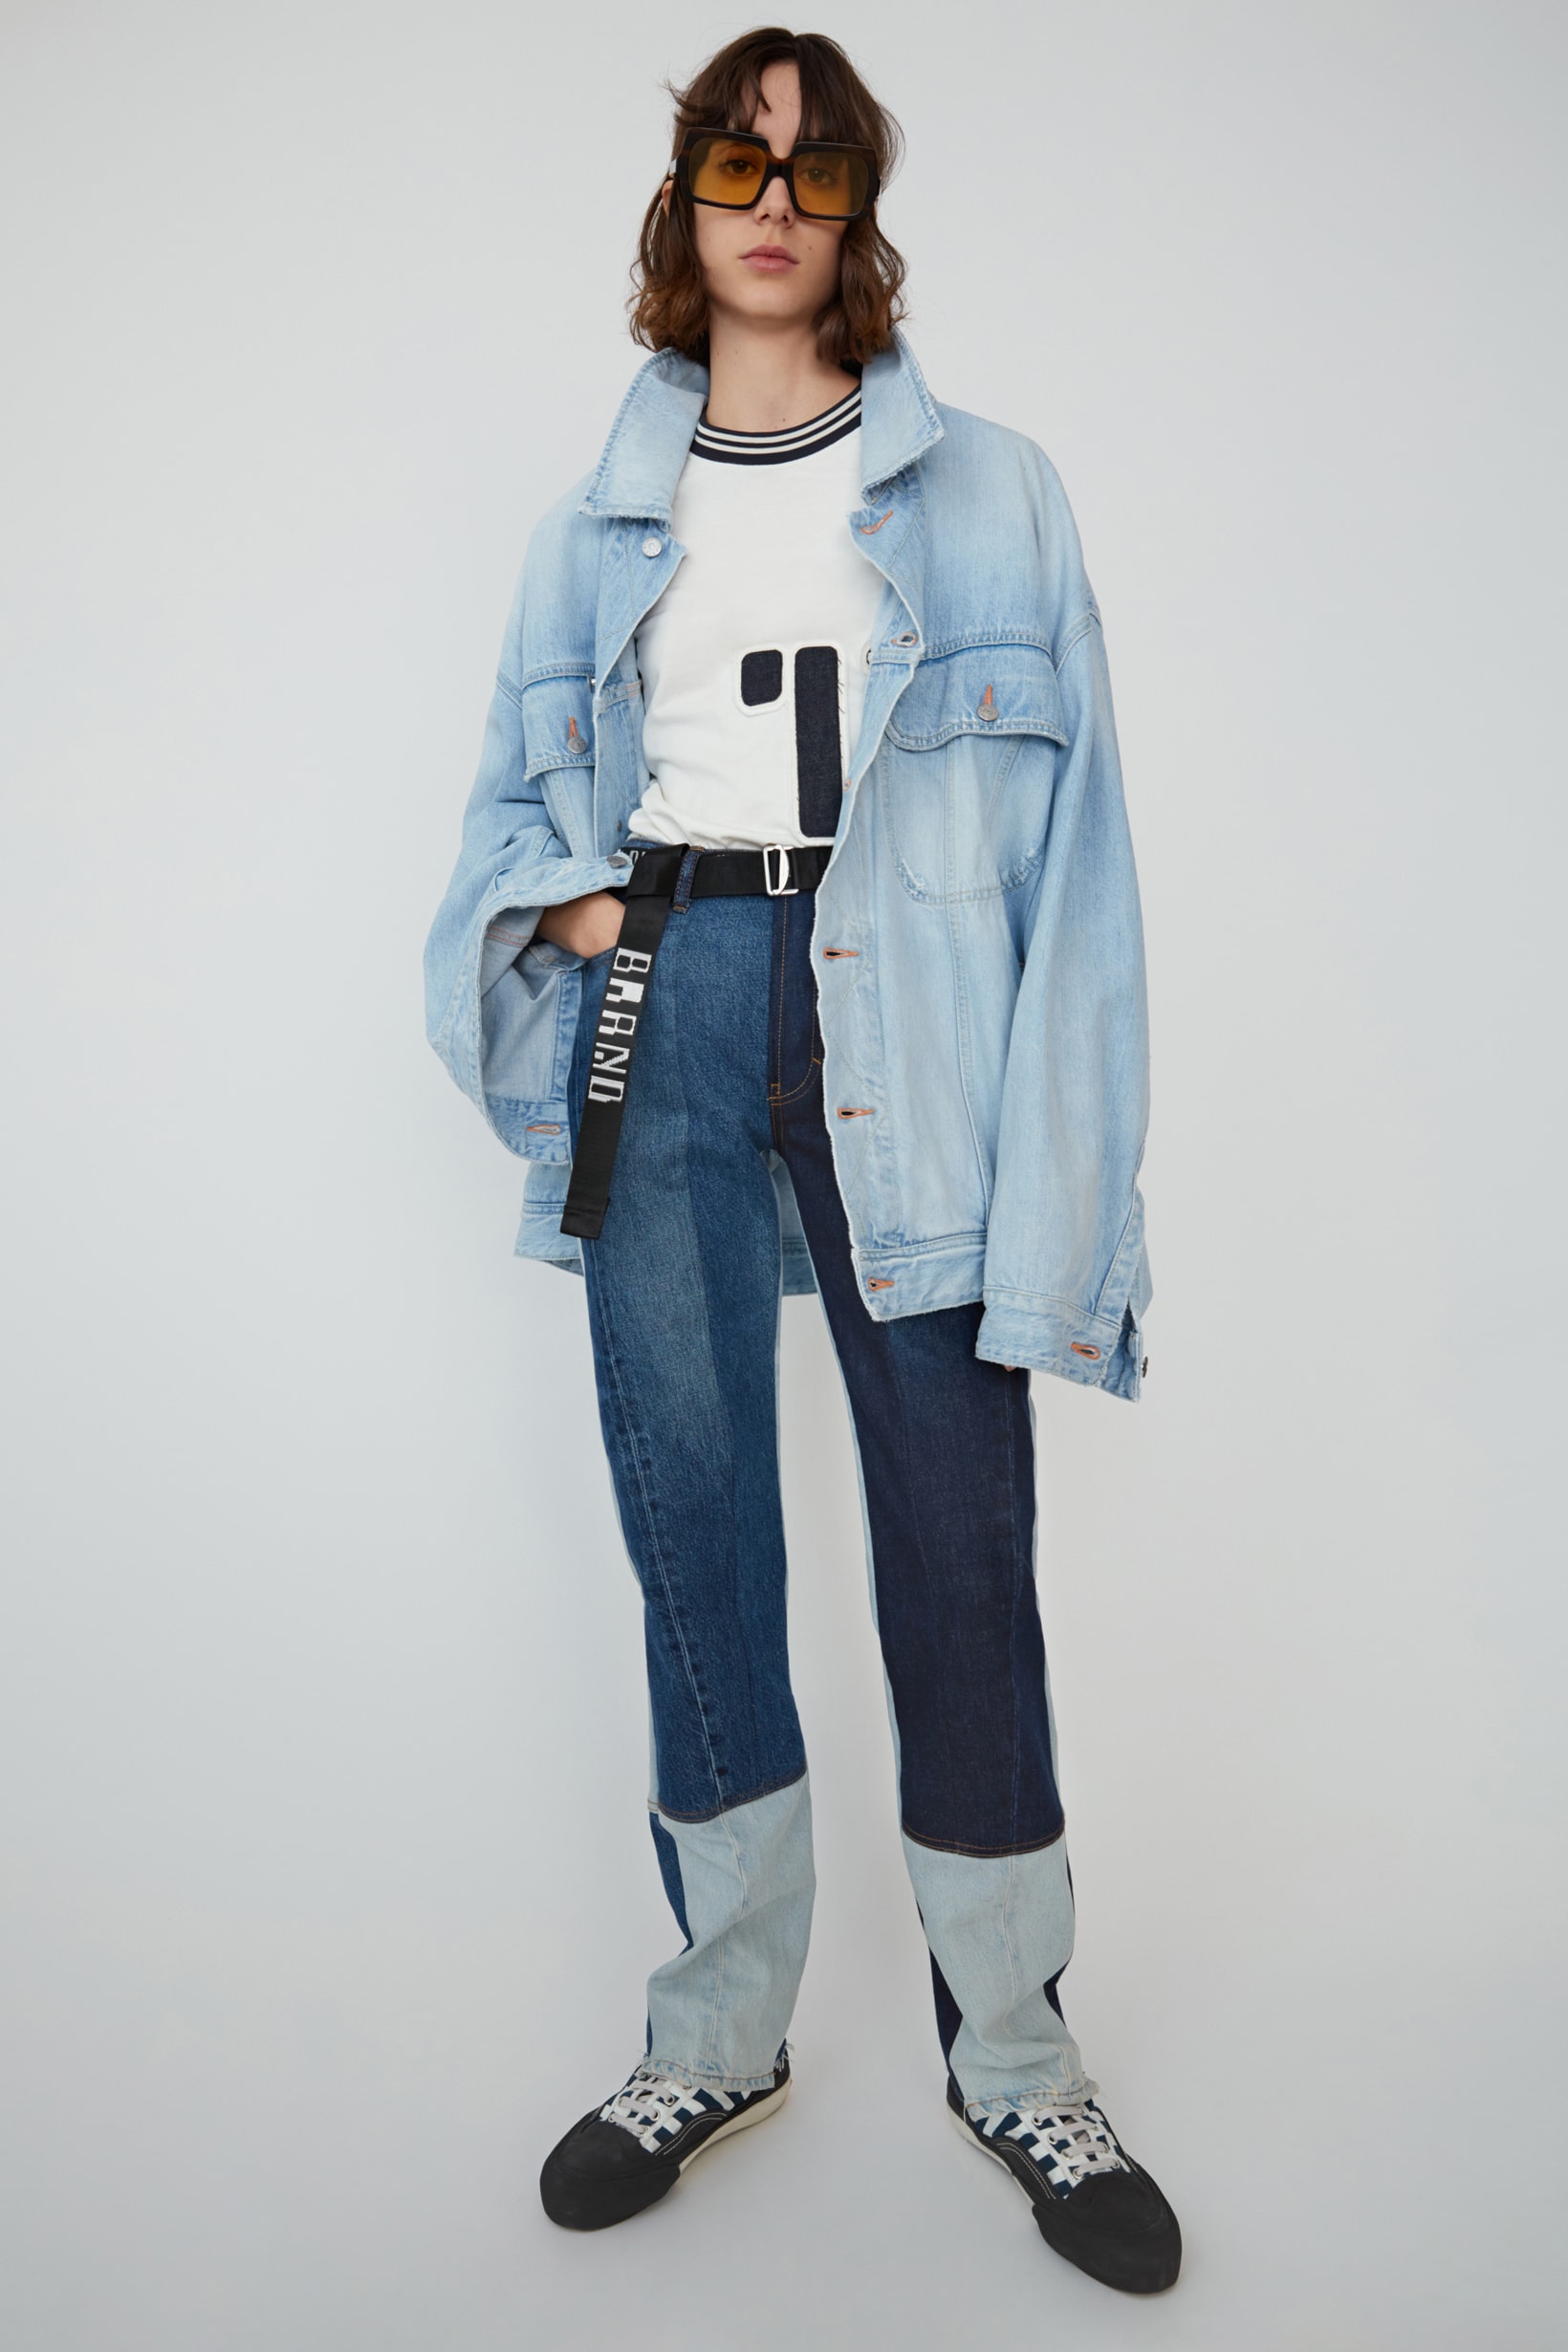 Acne Studios Spring Summer 2019 Denim Collection Jacket Jeans Blue Shirt White